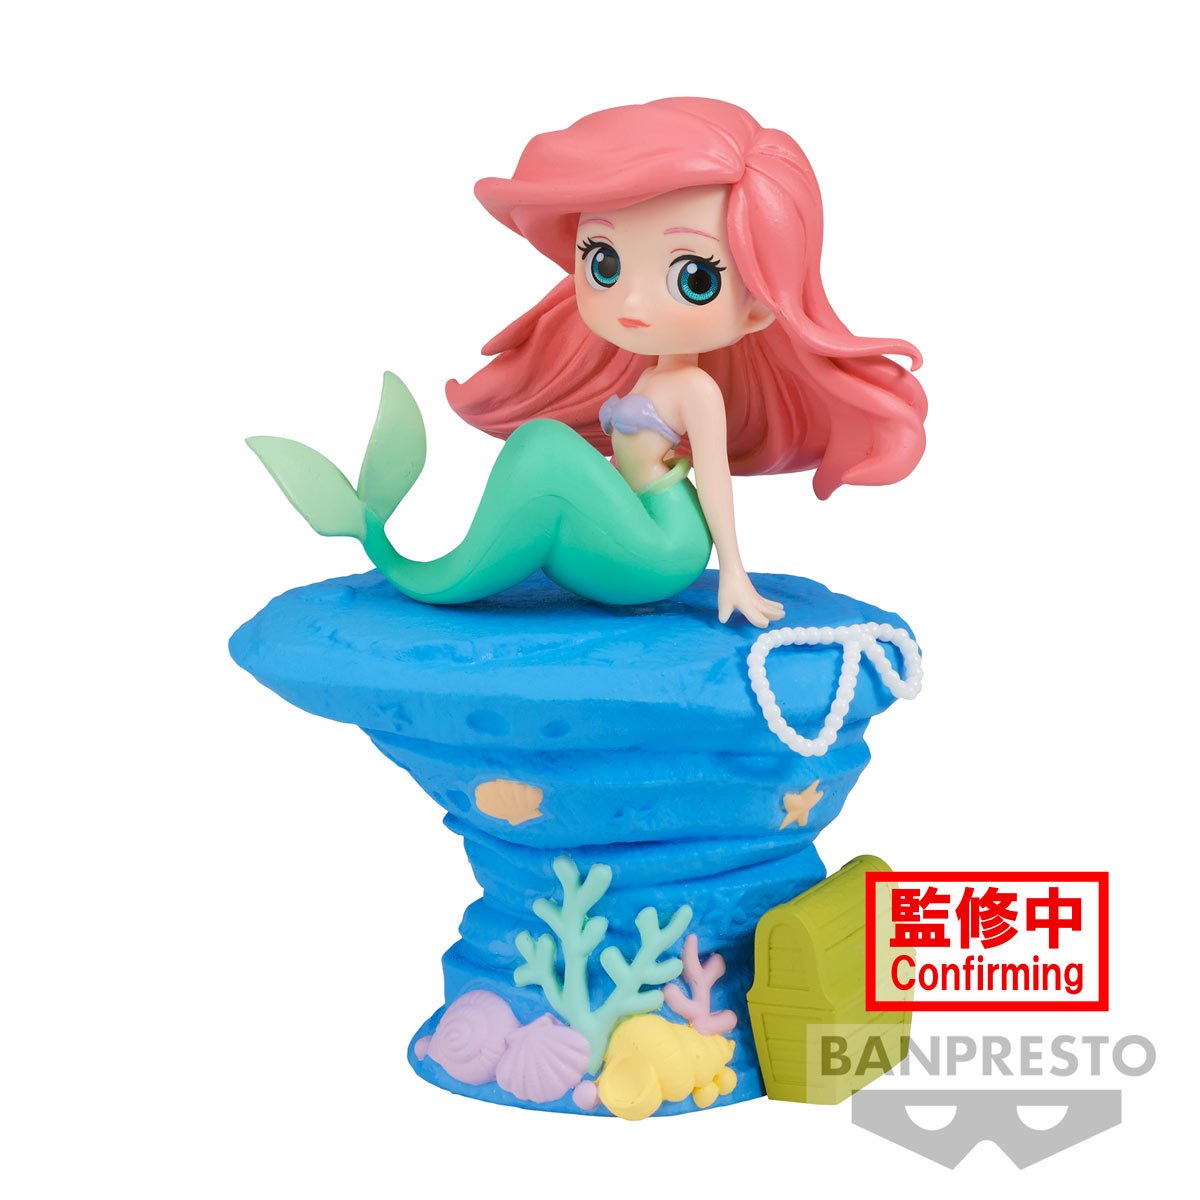 PRESALE | The Little Mermaid - Ariel - Q Posket Stories - Version B, Mermaid style (Banpresto)